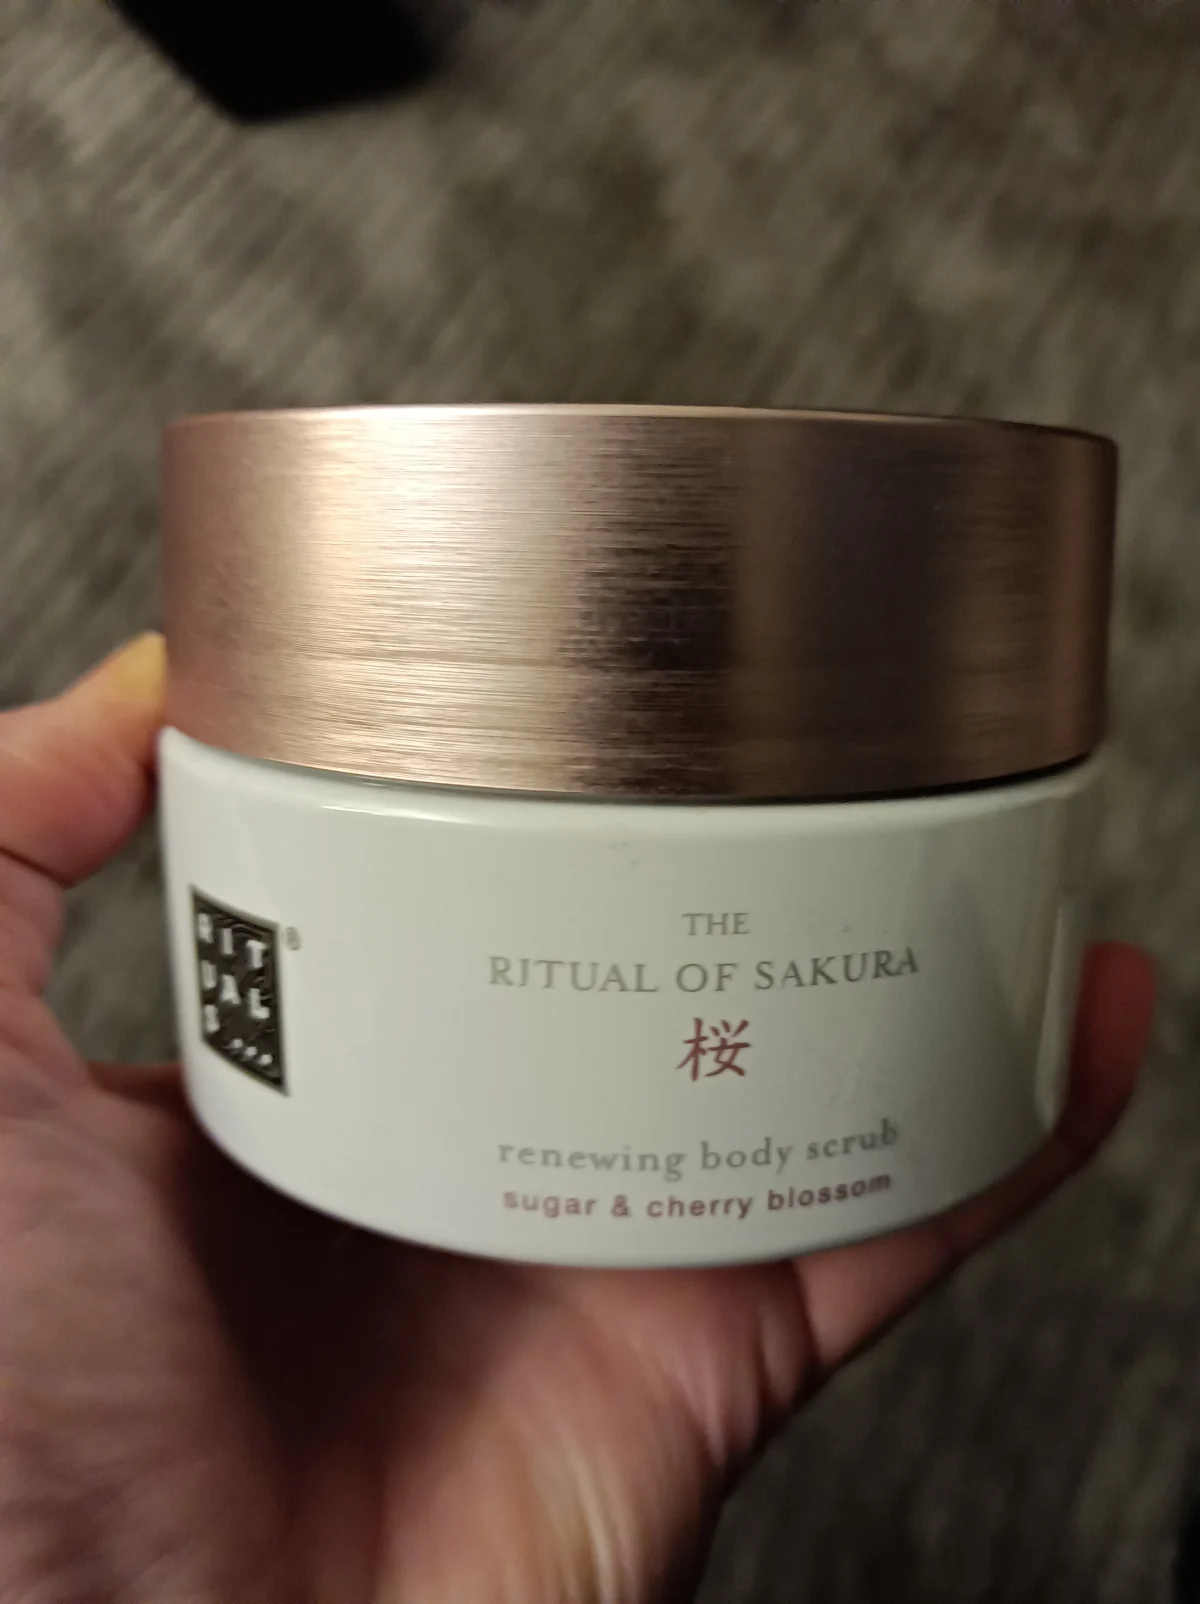 The Ritual of Sakura Body Scrub 375g - review image